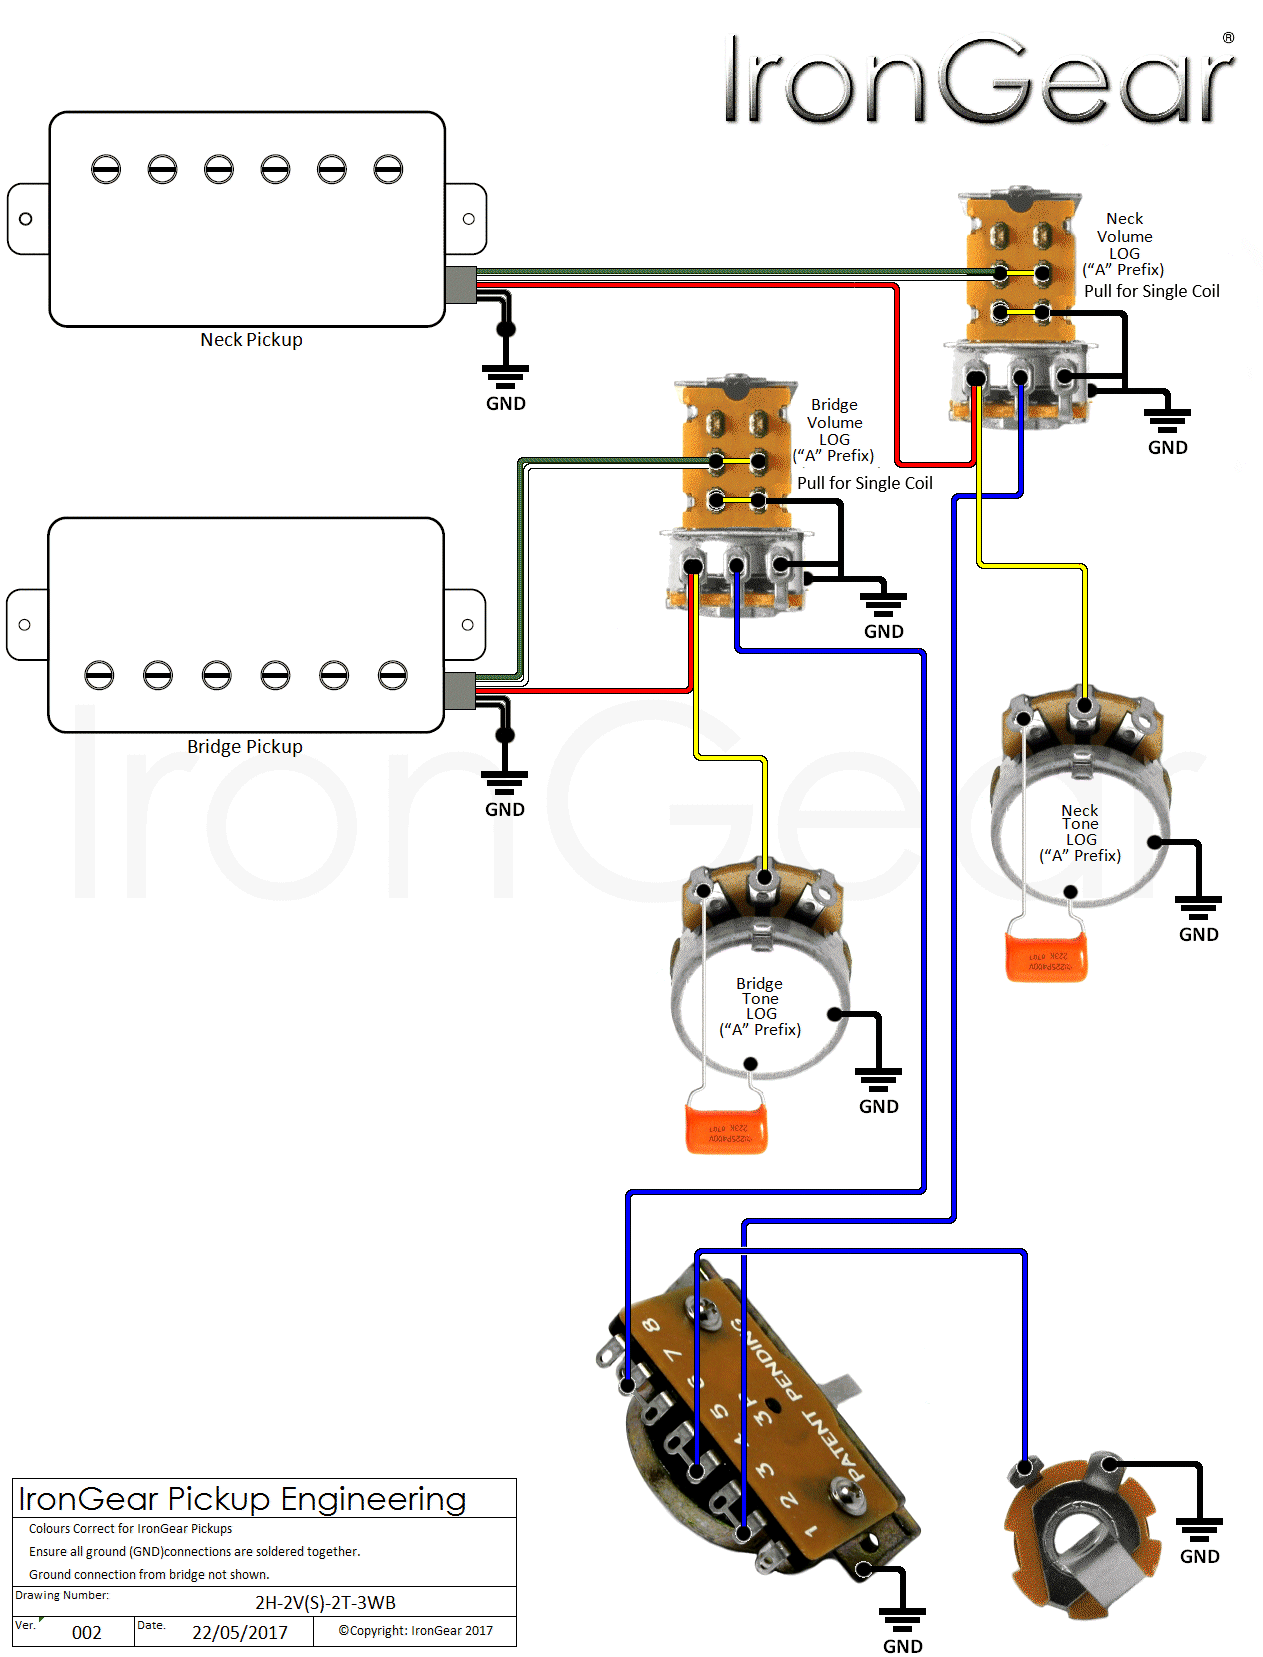 Wiring Diagram For Humbucker Pickups from www.irongear.co.uk